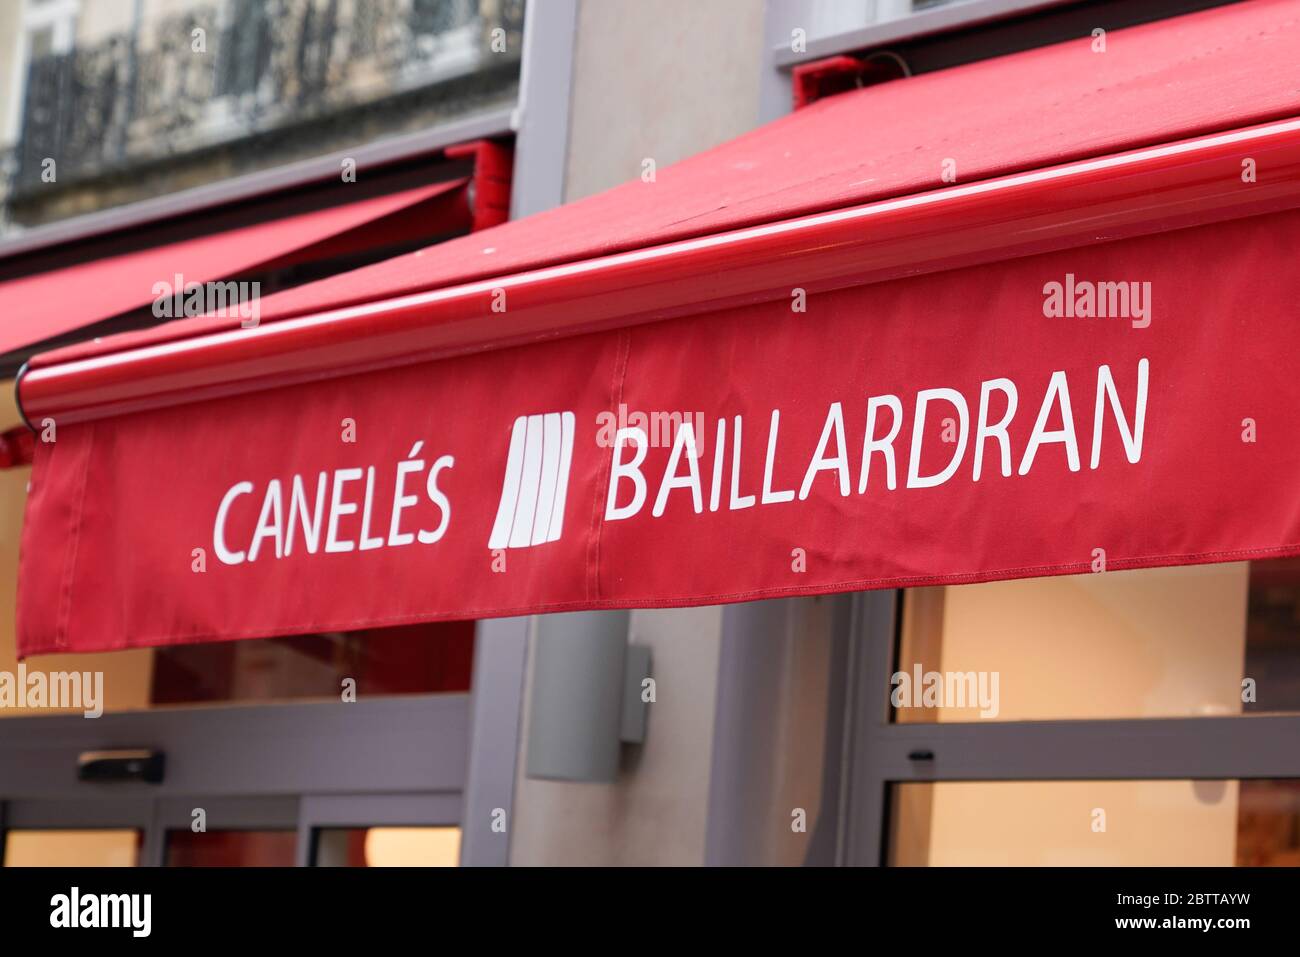 Bordeaux , Aquitaine / France - 05 05 2020 : Baillardran pastry shop brand logo and sign on canelés store Stock Photo